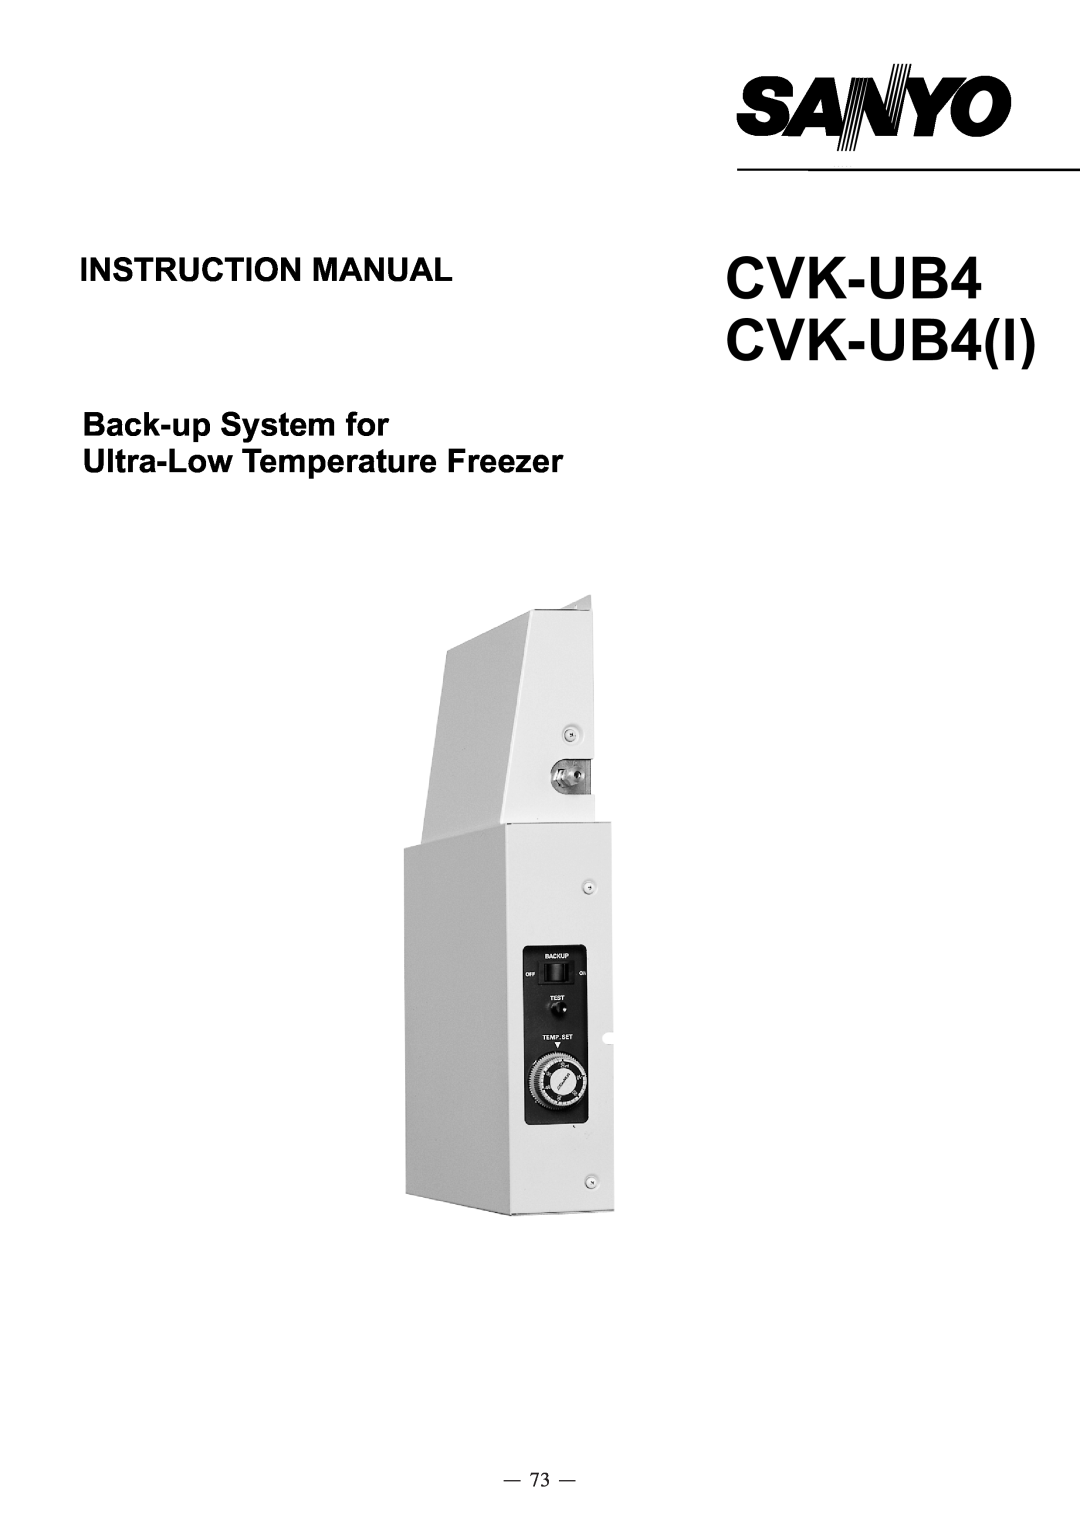 Sanyo MDF-C8V service manual CVK-UB4 CVK-UB4I, Instruction Manual, Back-upSystem for Ultra-LowTemperature Freezer 